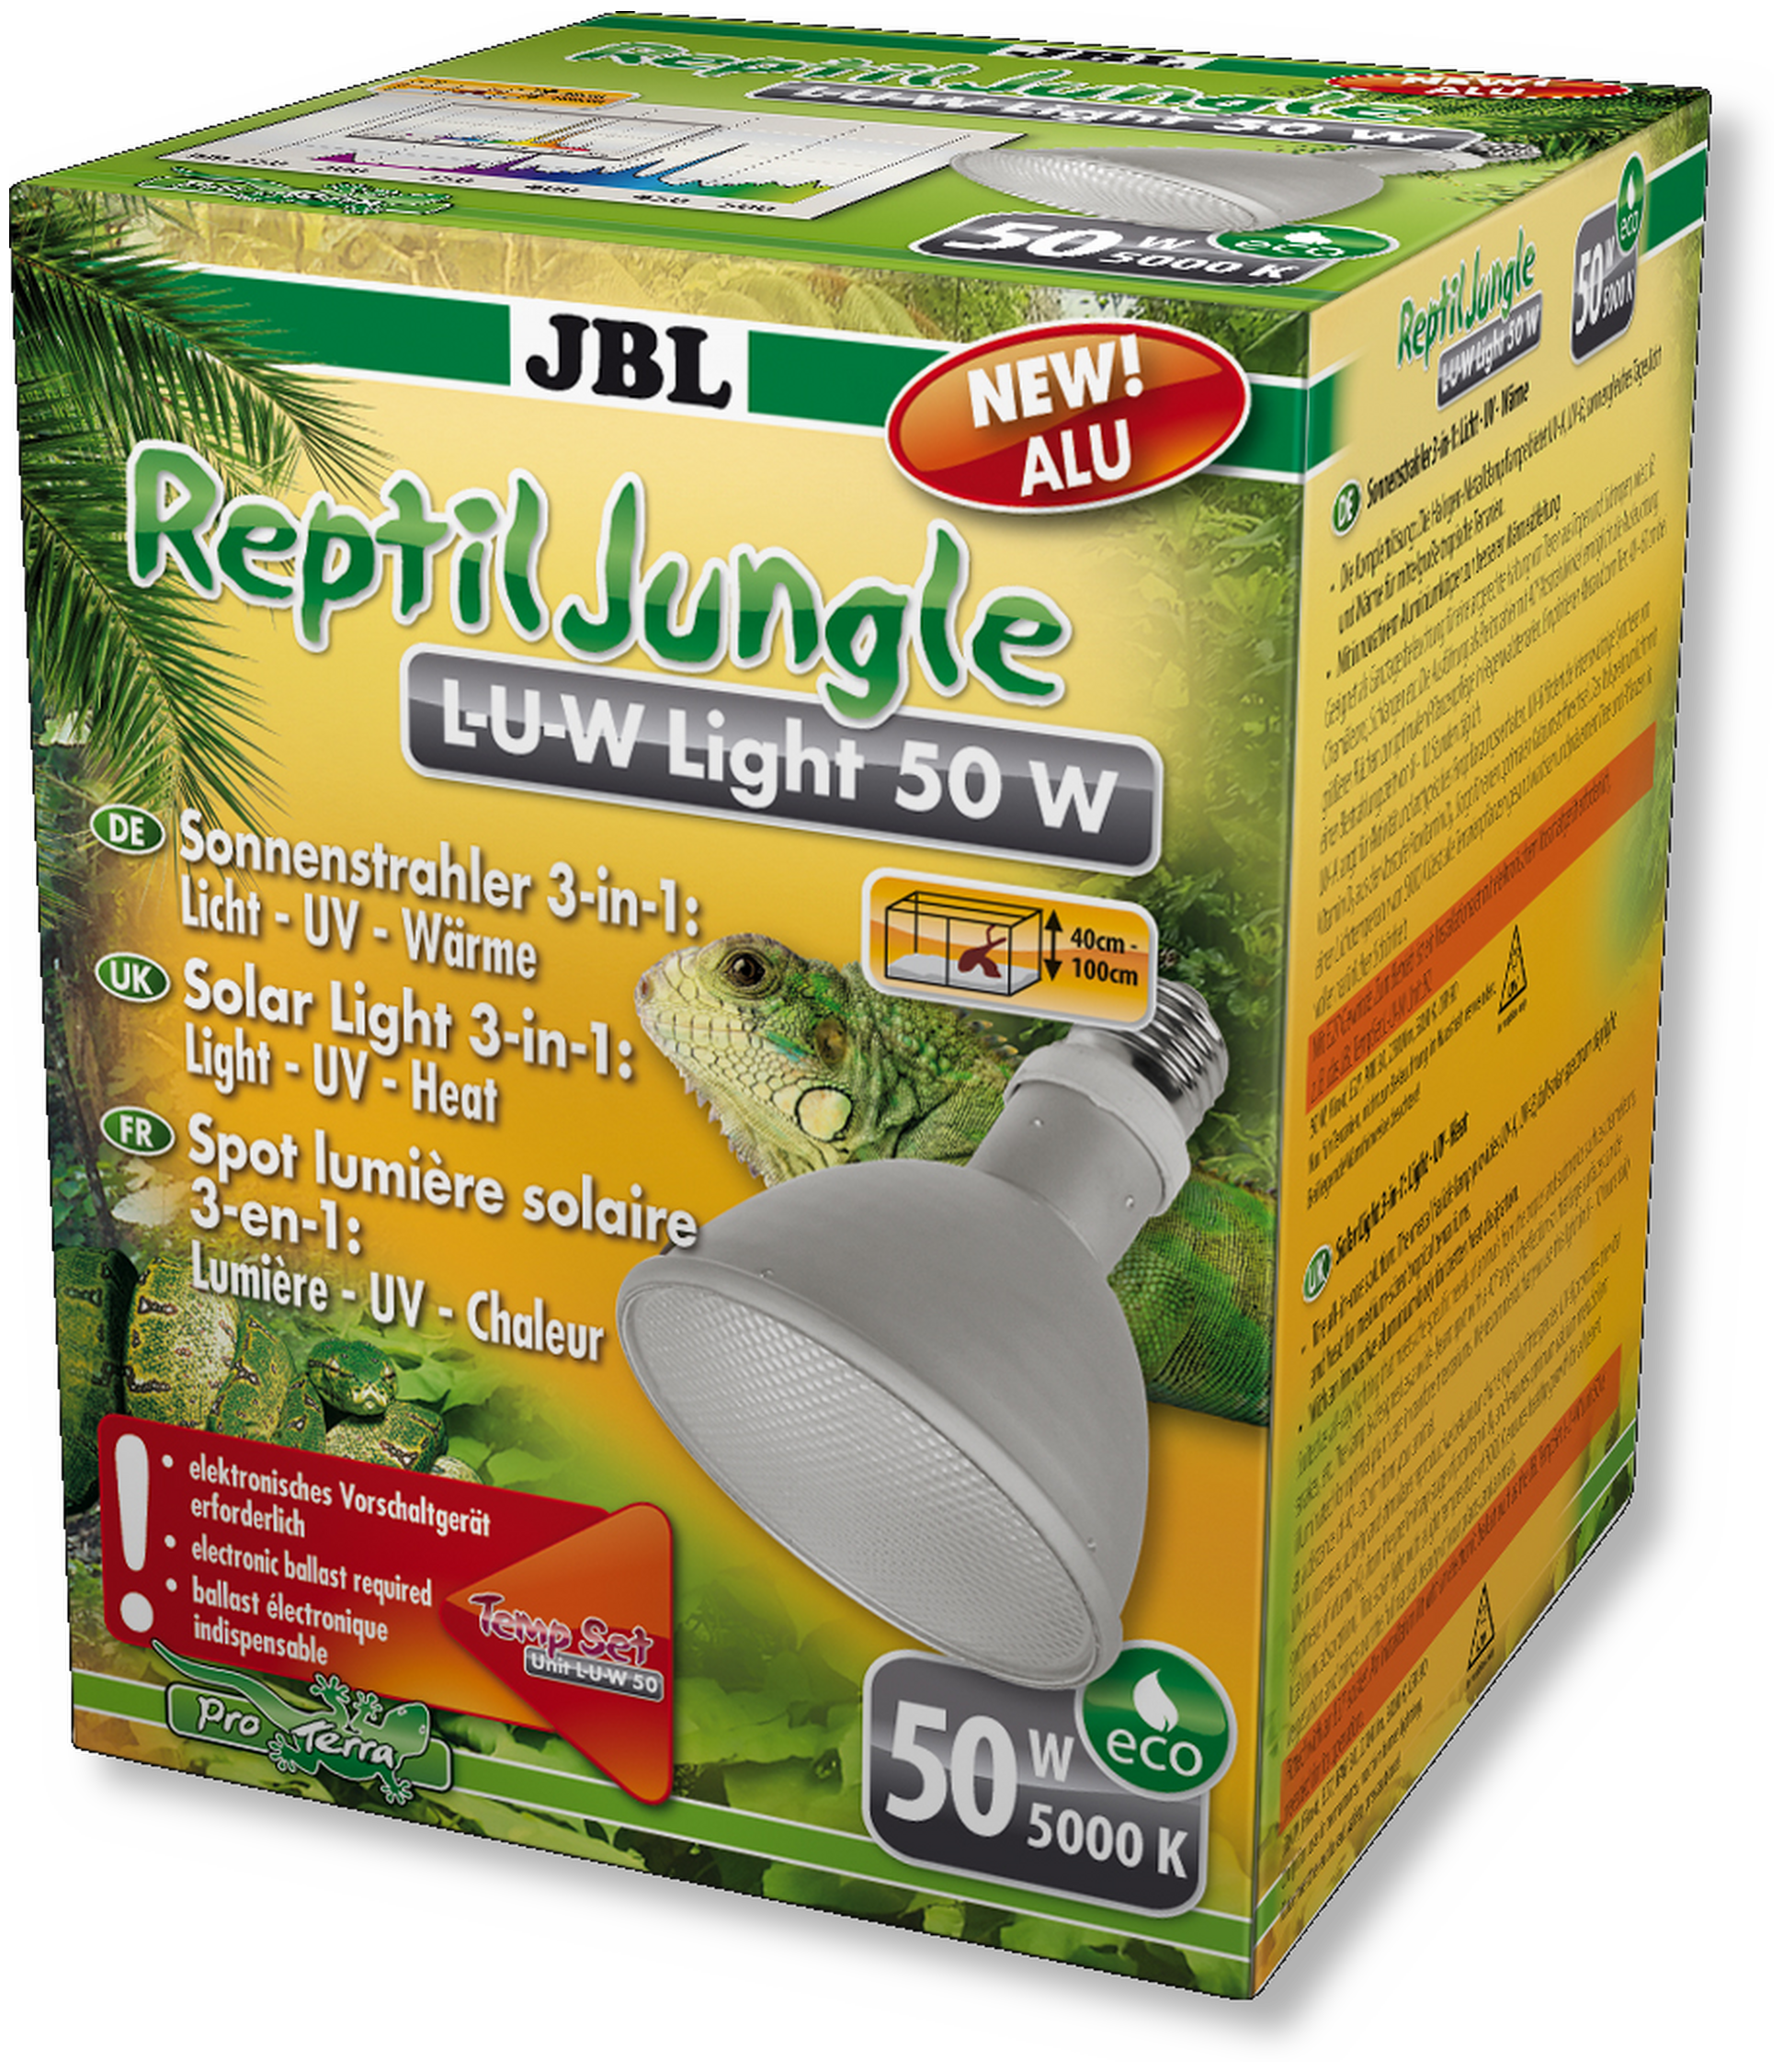 JBL ReptilJungle LUW Light alu Wide-beam spotlight for rainforest terrariums